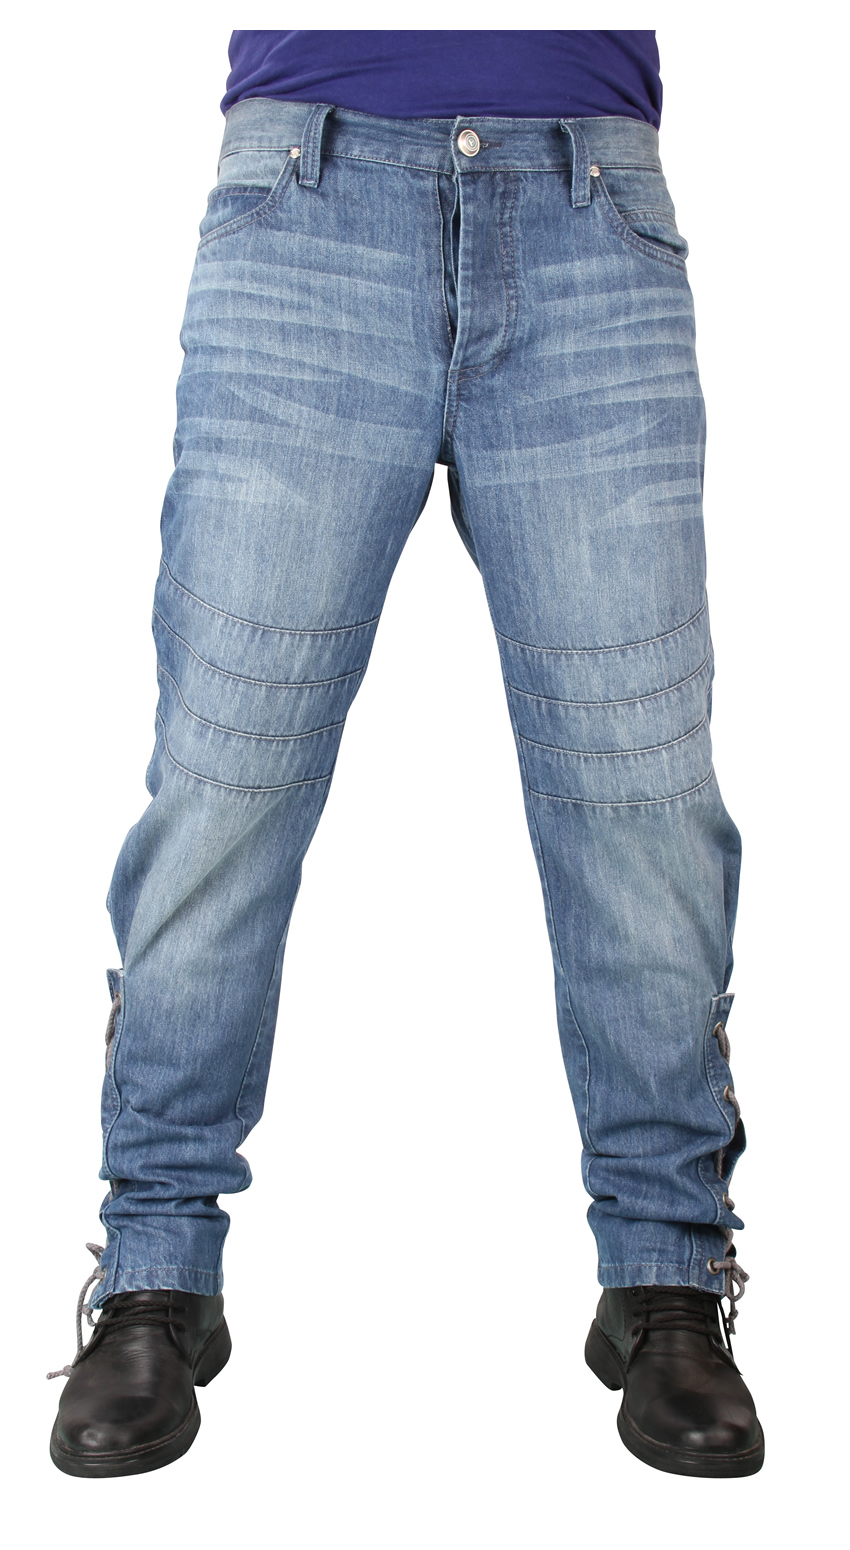 2018 Trendy Baggy Torn Bottom Stylish Jeans FGL-211